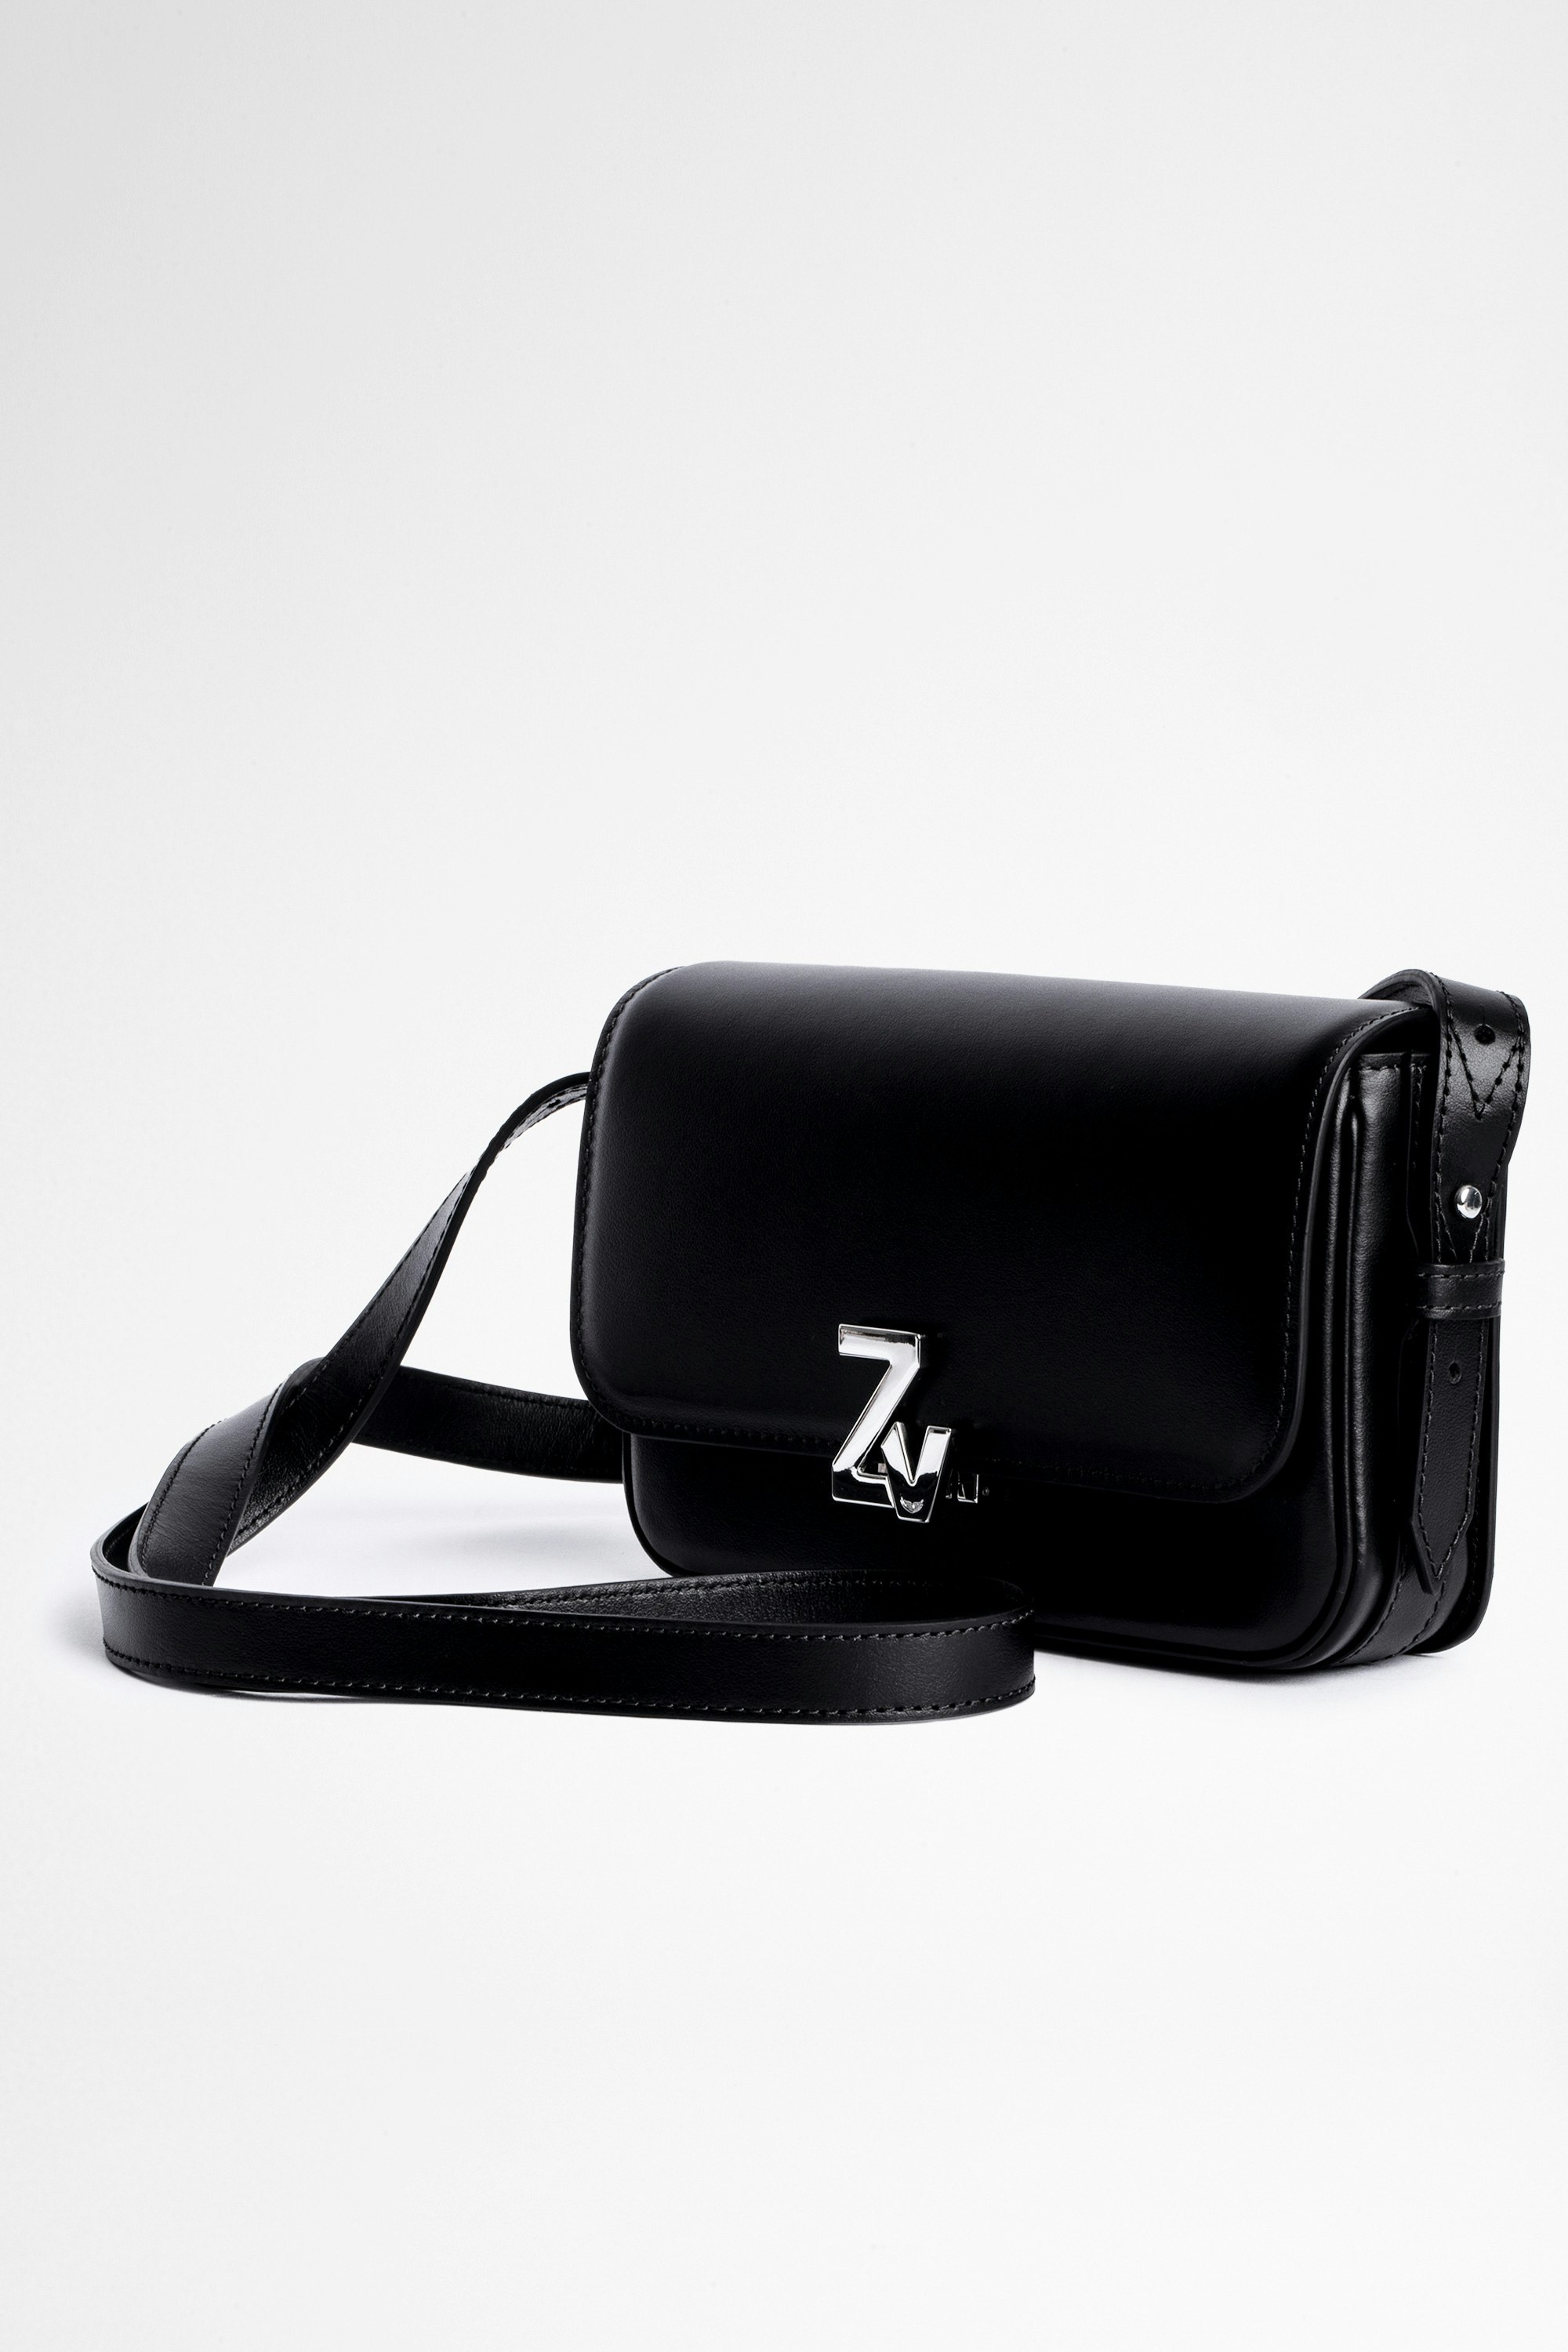 Le Mini ZV Initiale Bag 